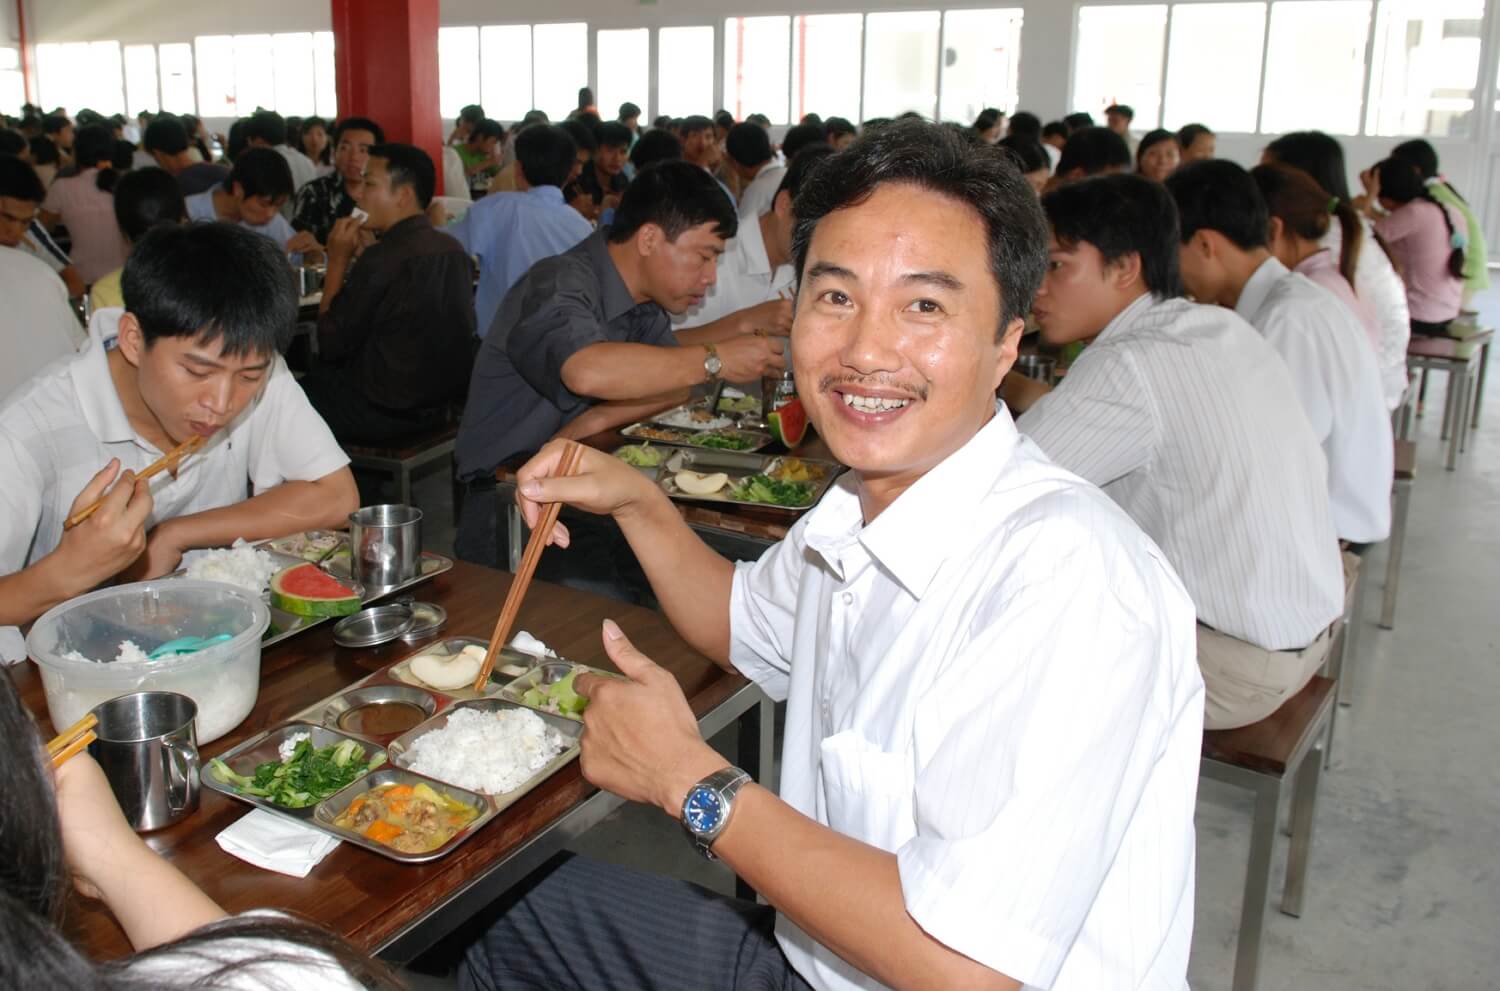 Vietnam -&nbsp;Sunne medarbeidere - people eating lunch